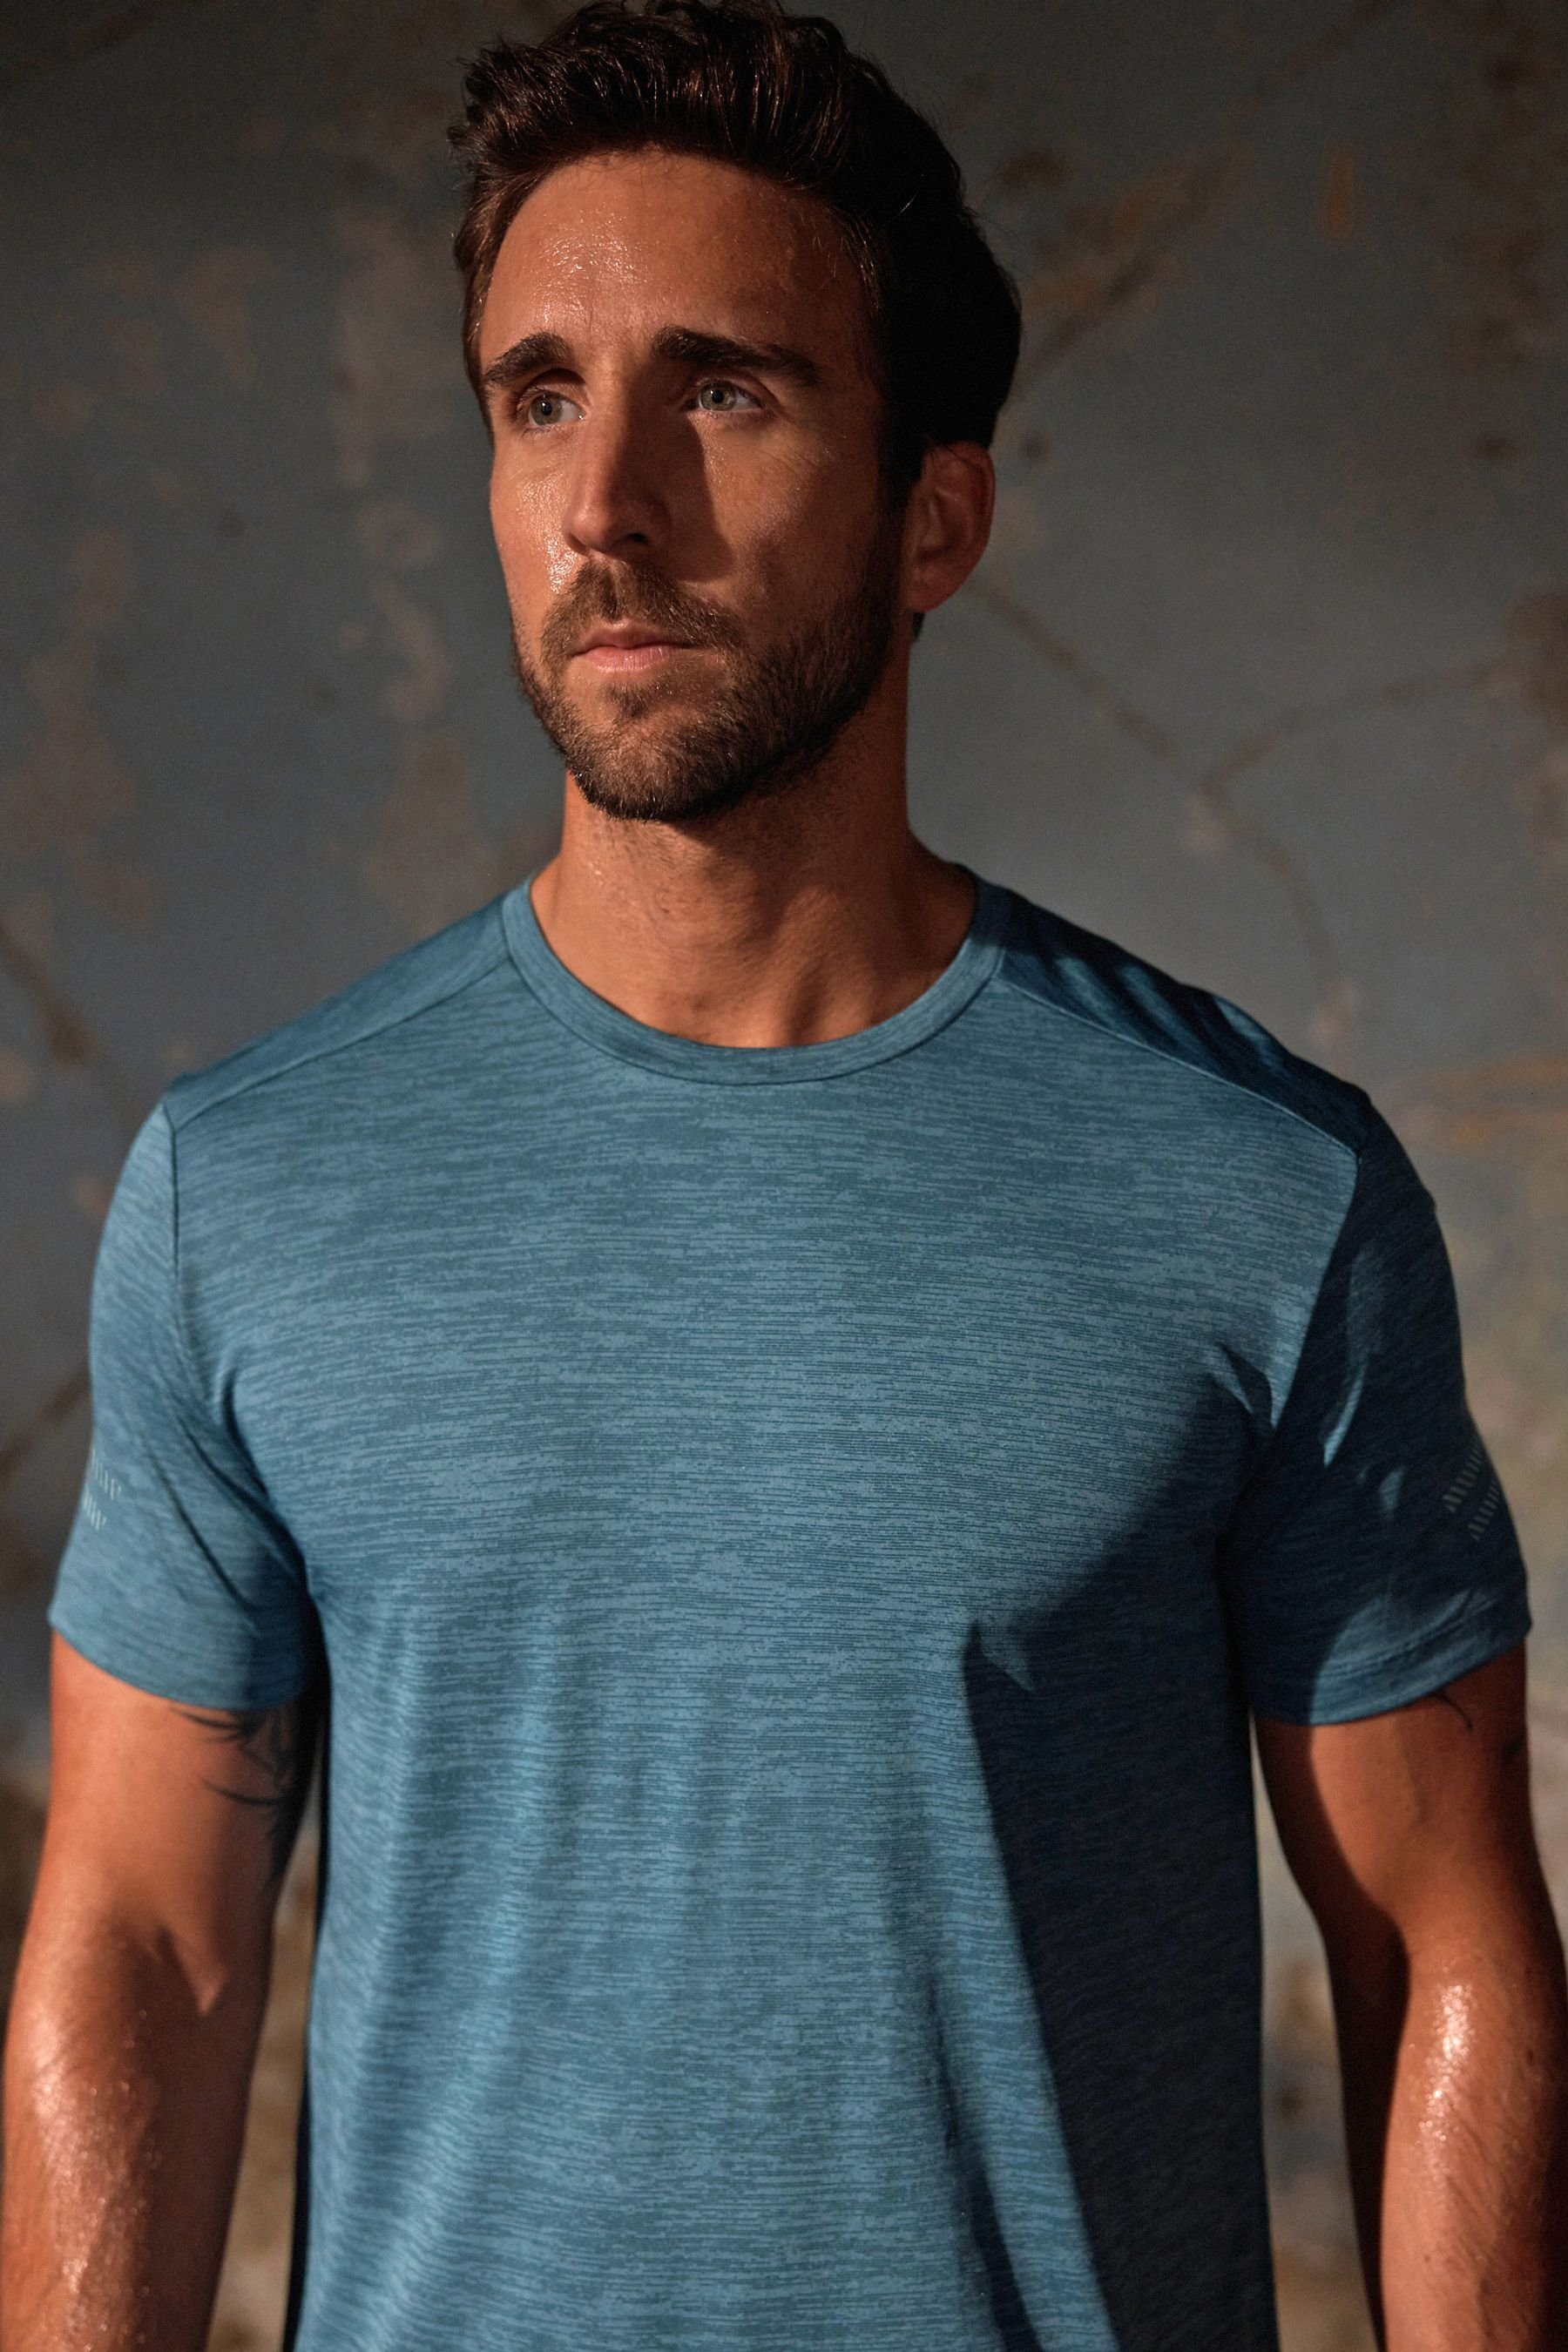 Active Blue Next (1-tlg) Next Sport-T-Shirt Trainingsshirt